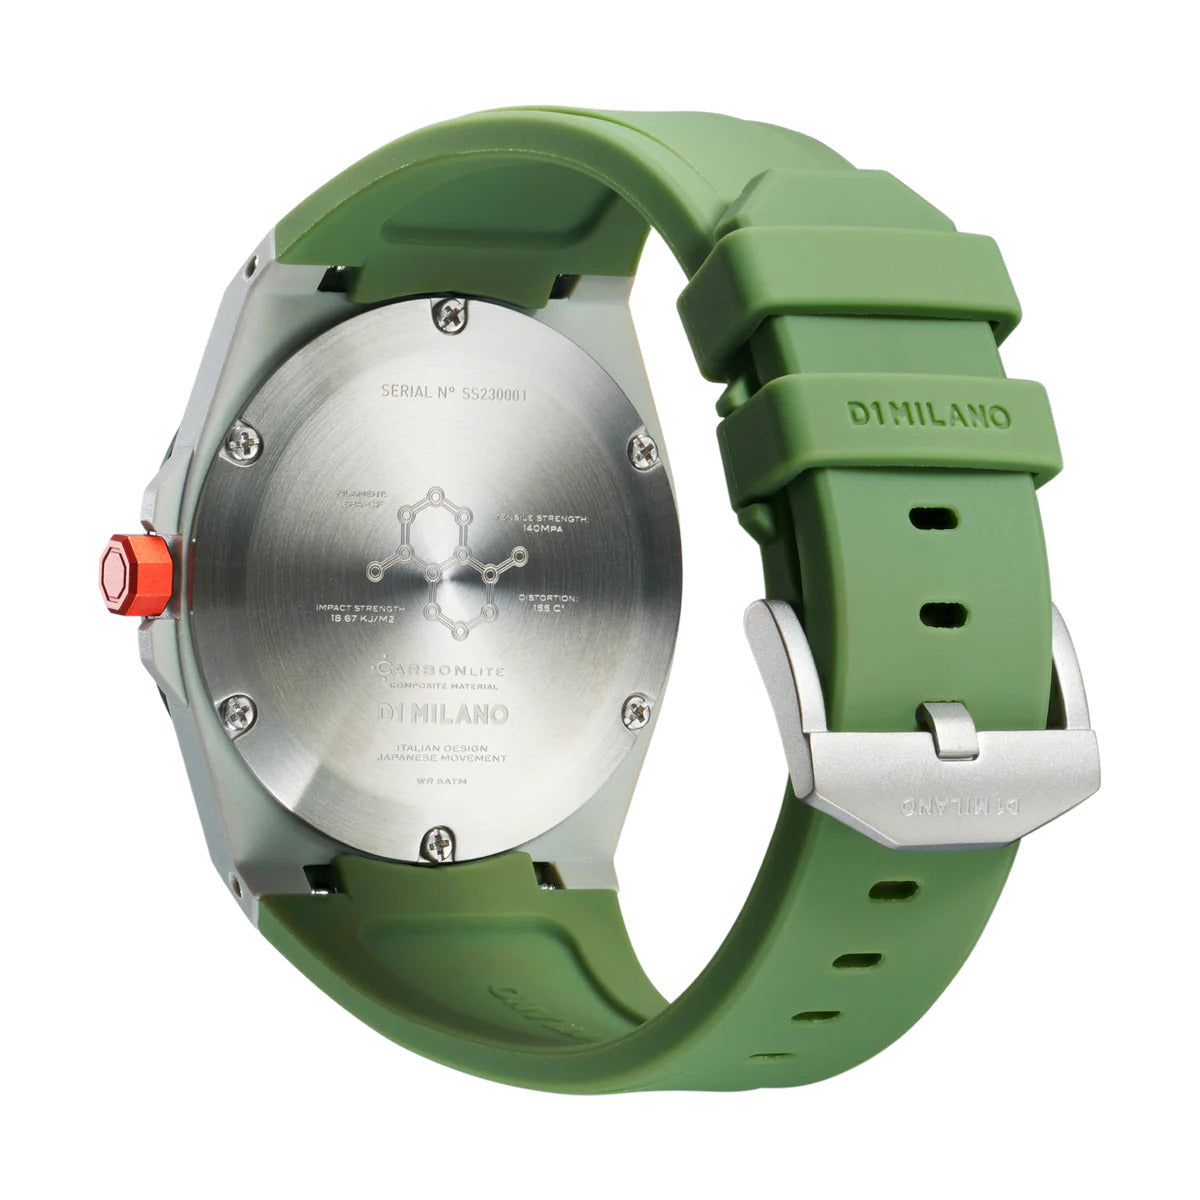 D1 Milano Men's Quartz Green Dial Watch - ML-0289